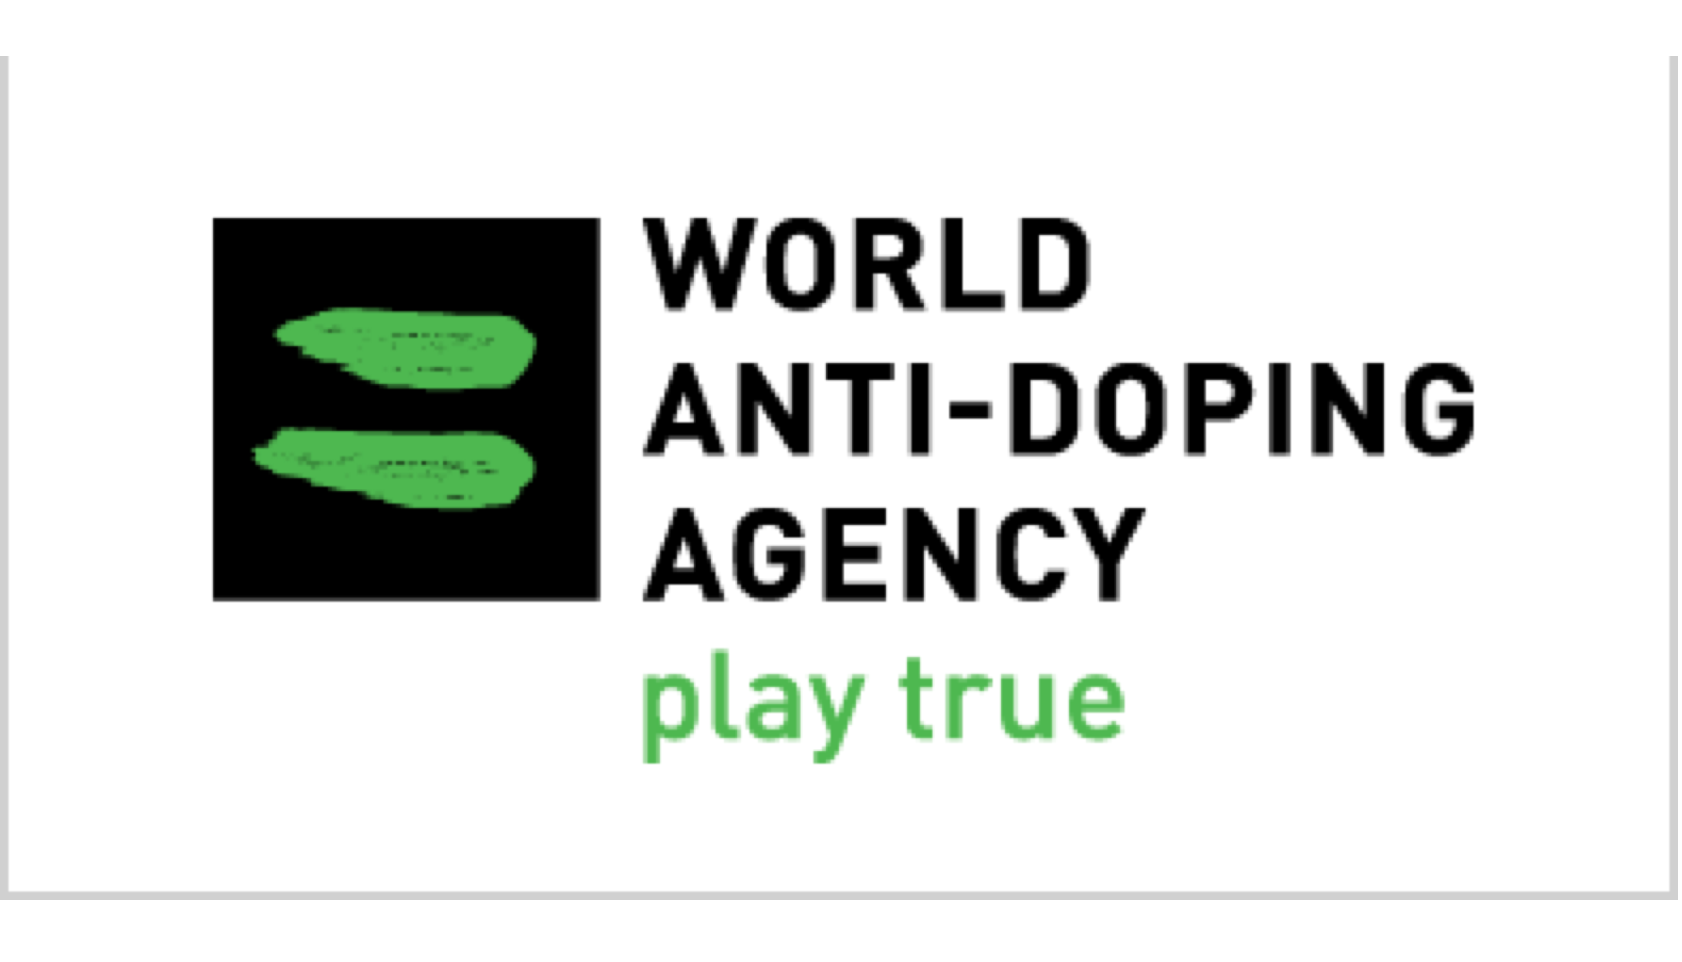 WADA cerca esperti di antidoping: come candidarsi